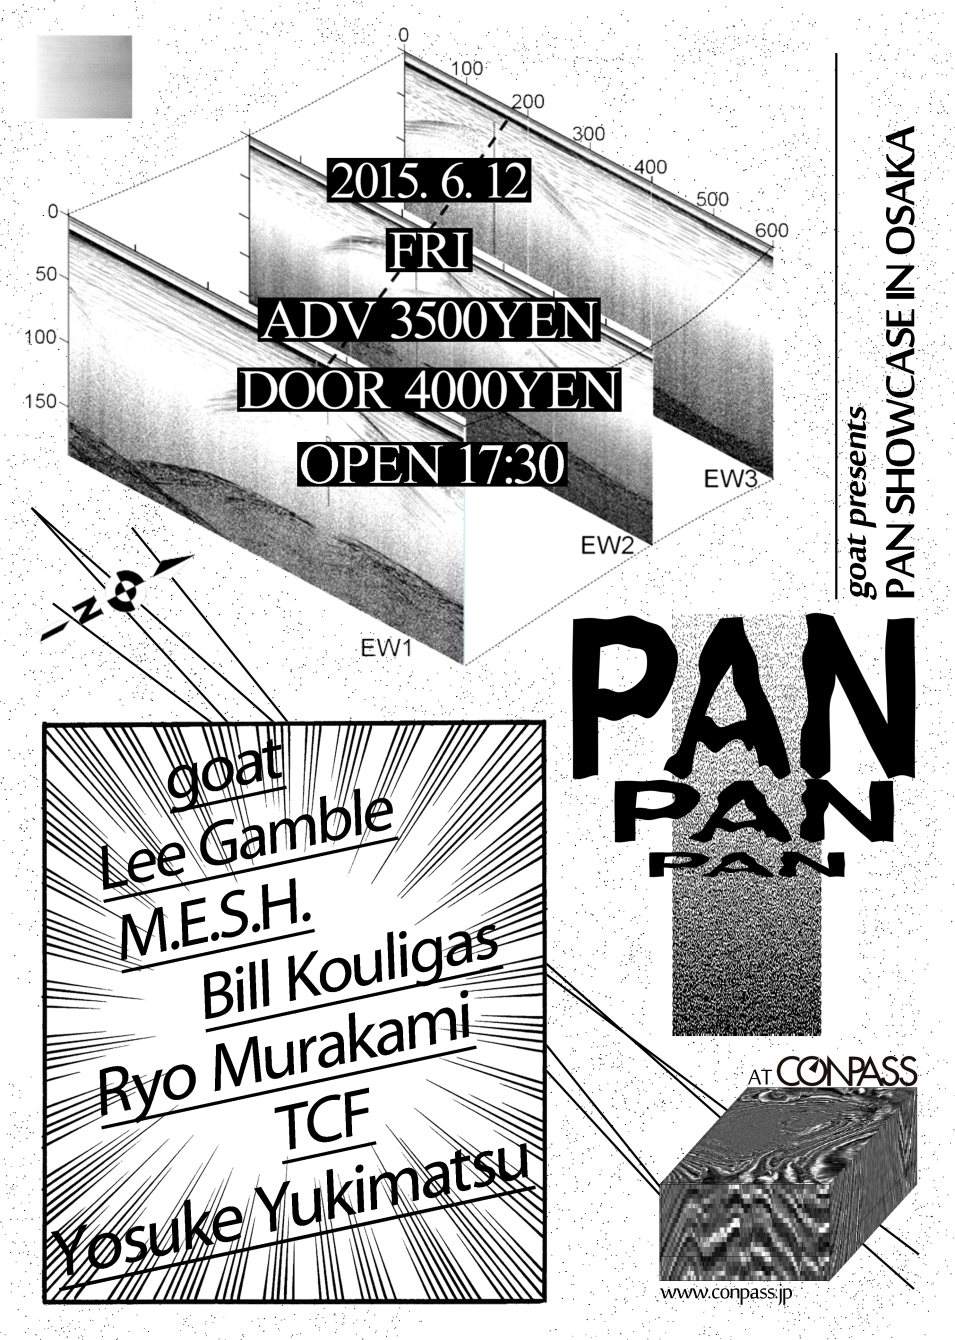 Goat presents Pan Showcase in Osaka - フライヤー表